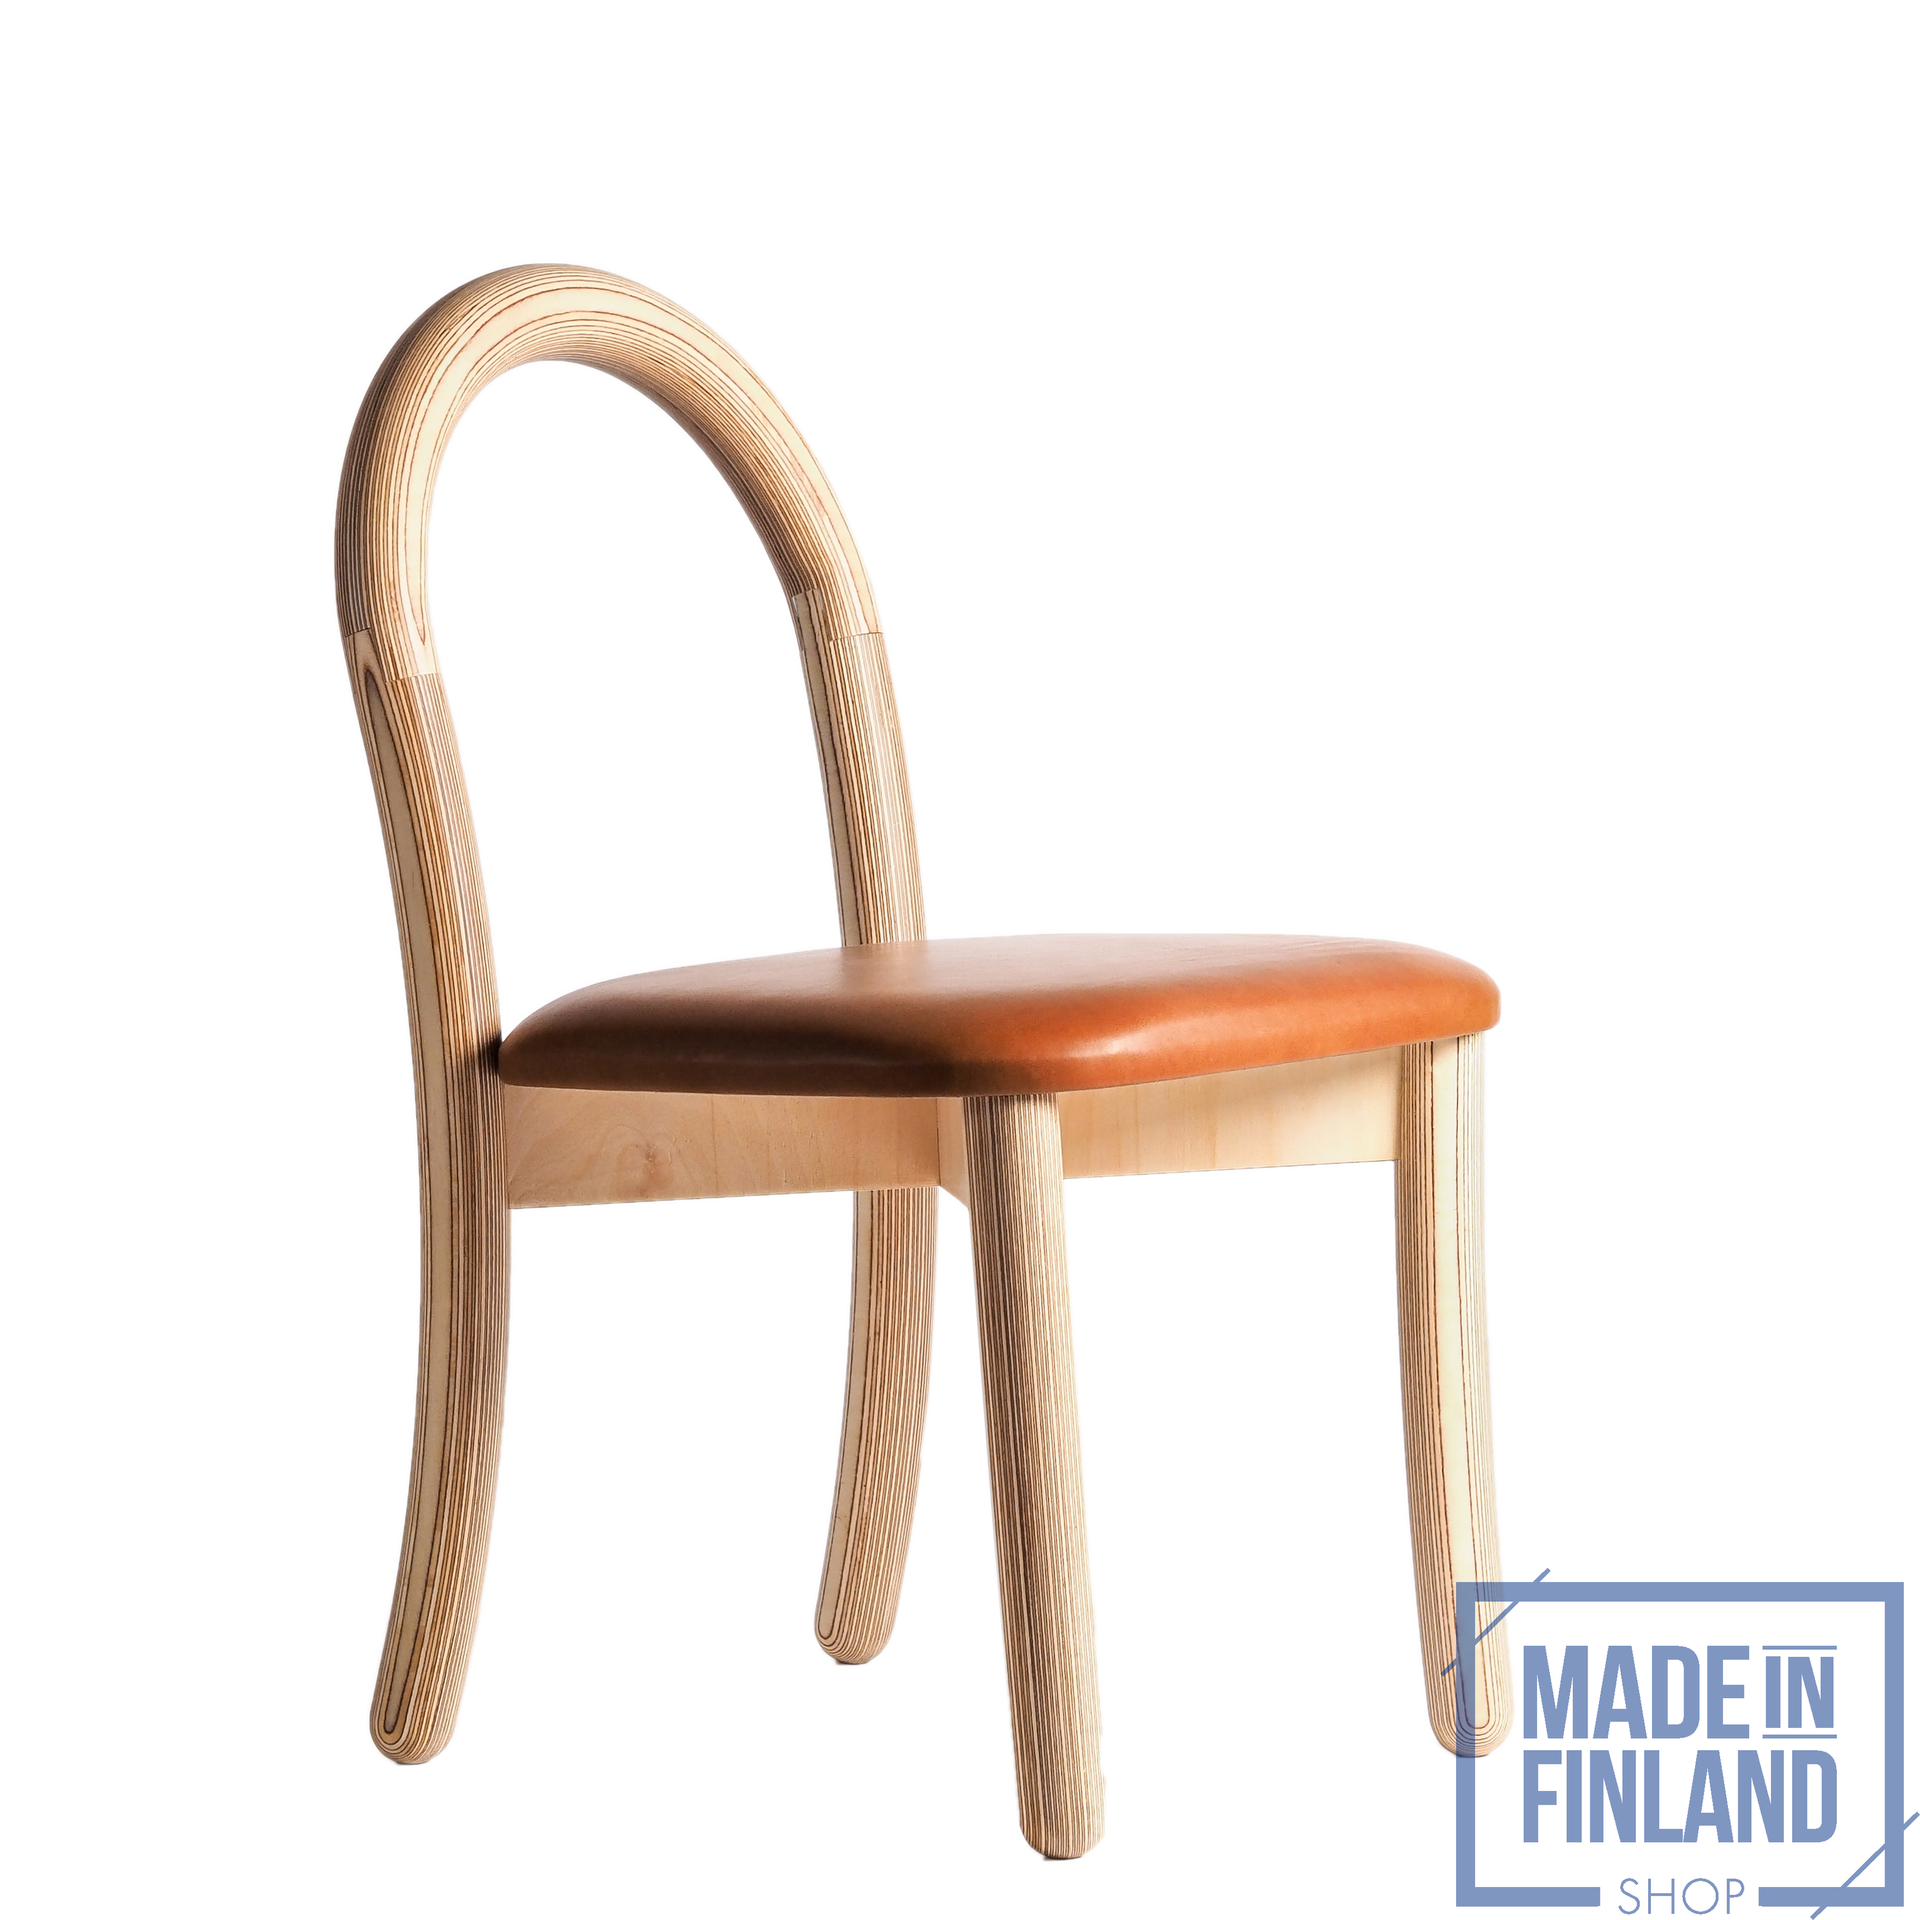 briefpapier behalve voor Leidinggevende Made By Choice Goma-stoel | Eetkamerstoelen | Made in Finland Shop  Nederlands